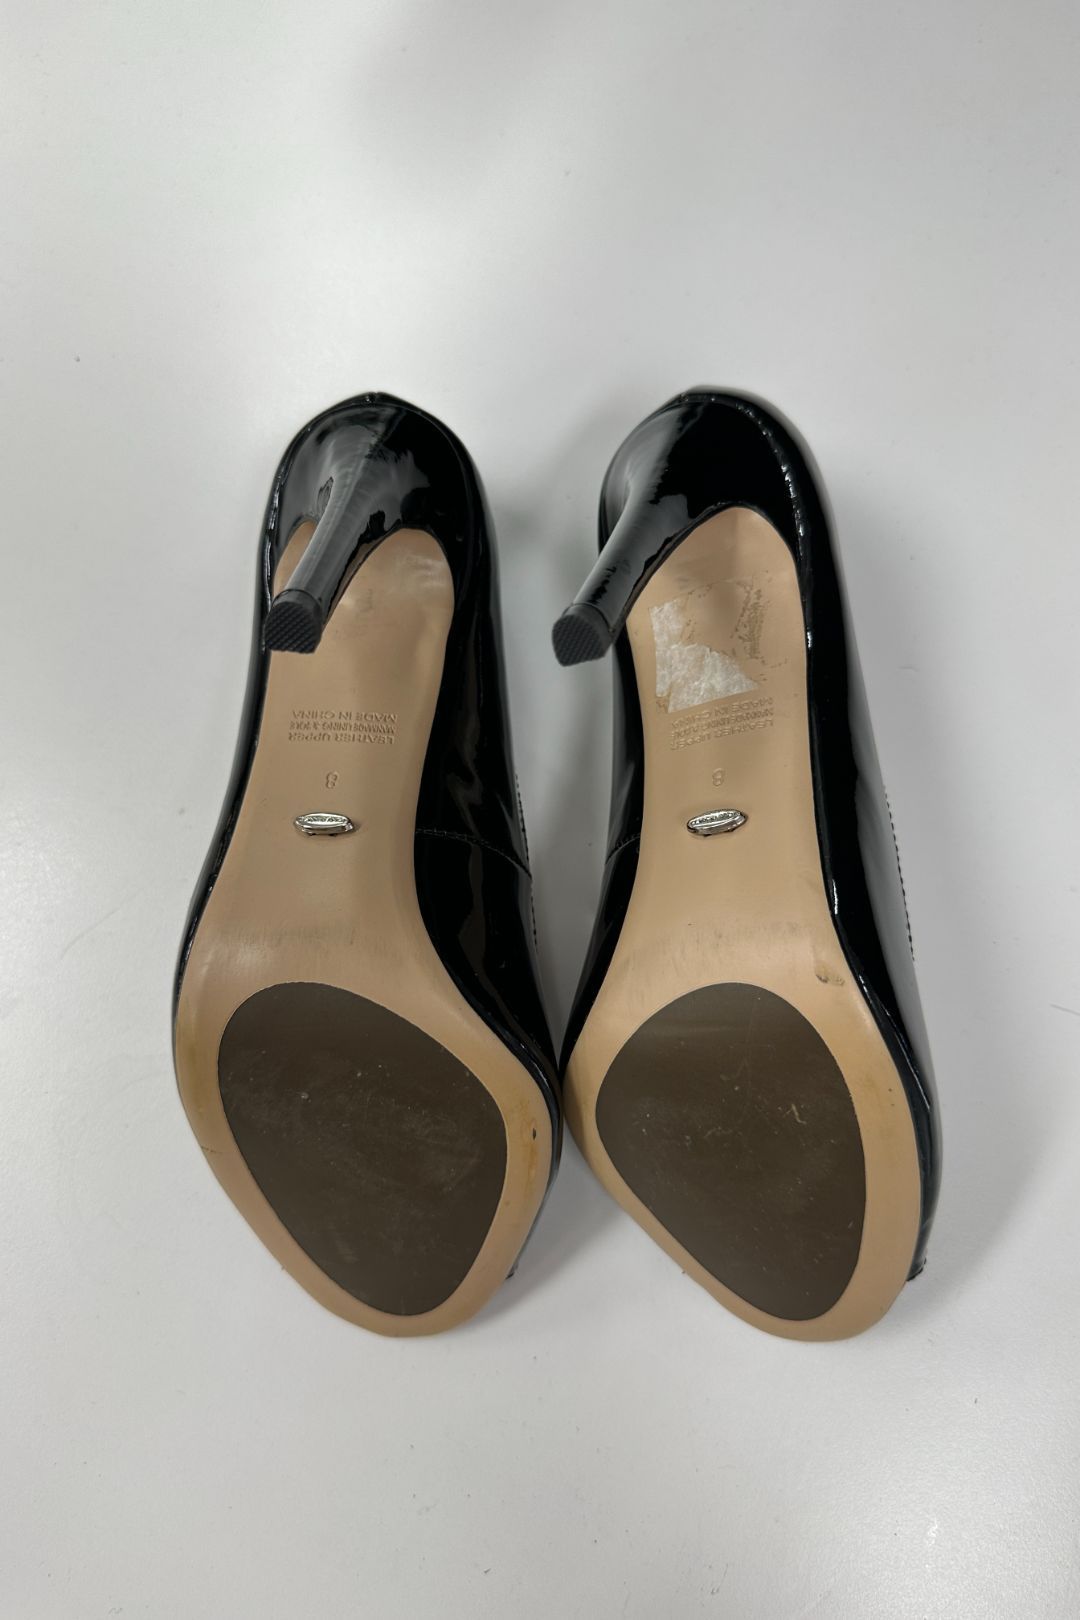 Tony Bianco Patent Leather Peep Toe Stiletto in Black